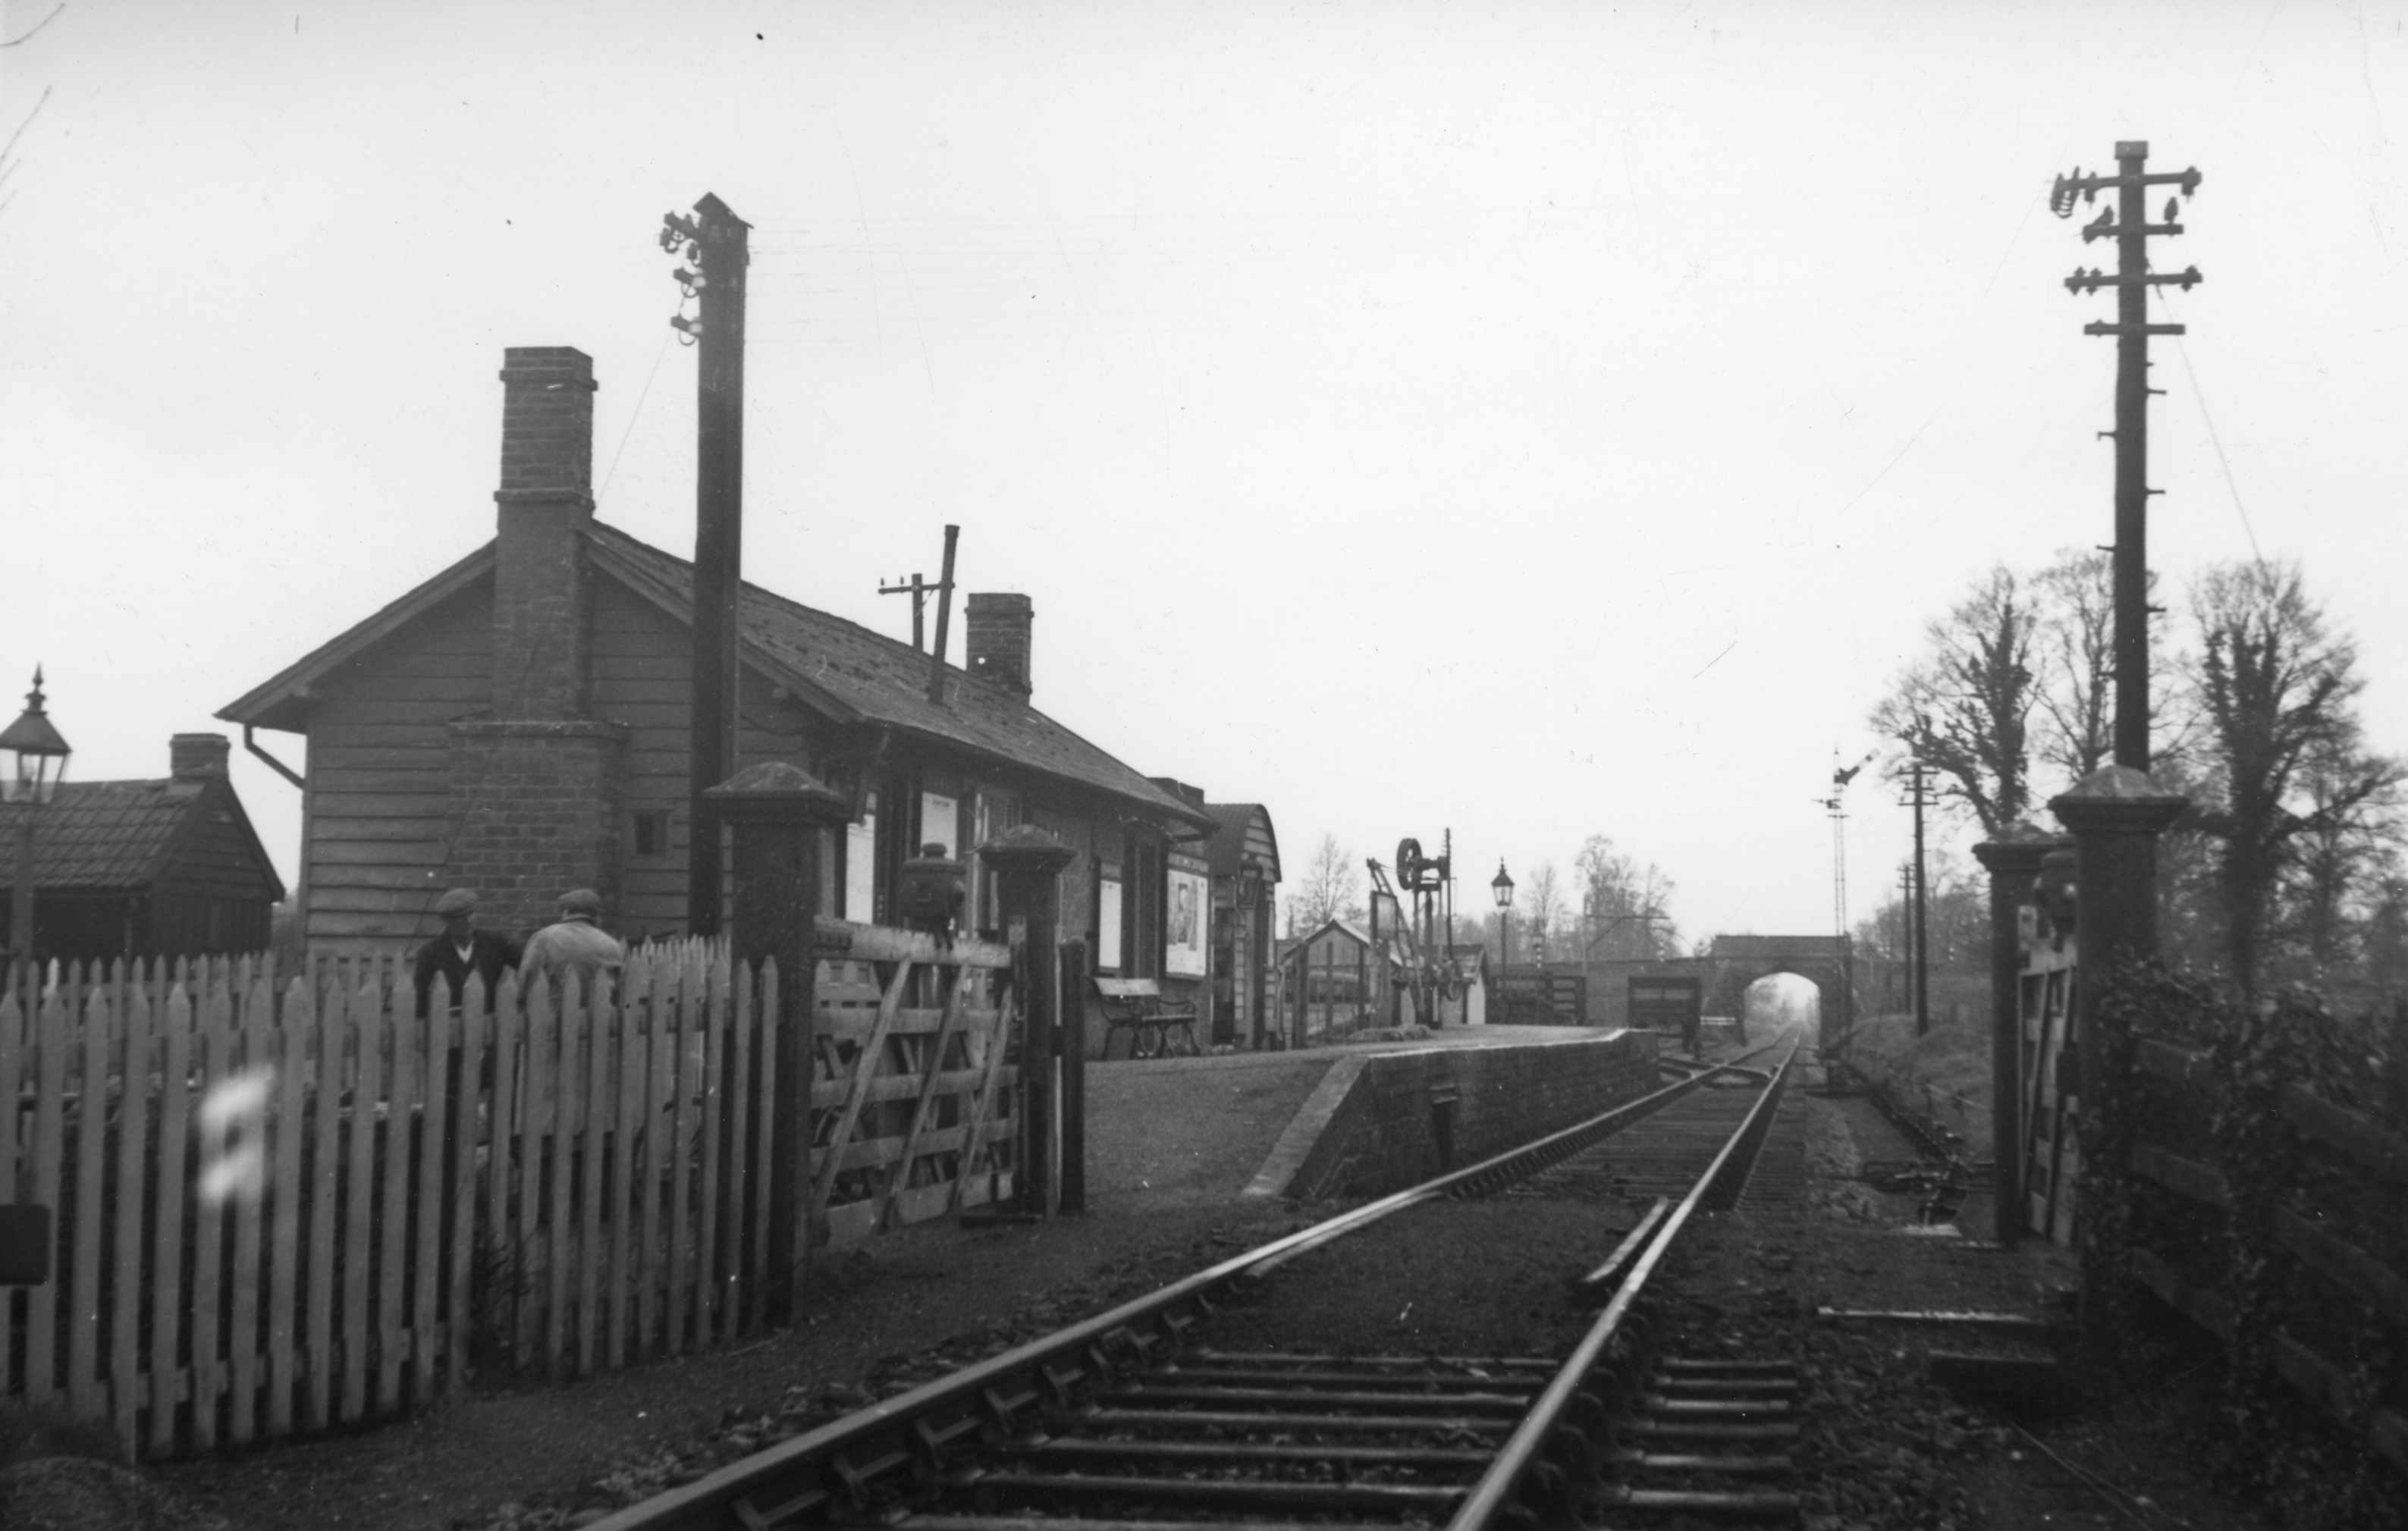 Henstridge station in 1952